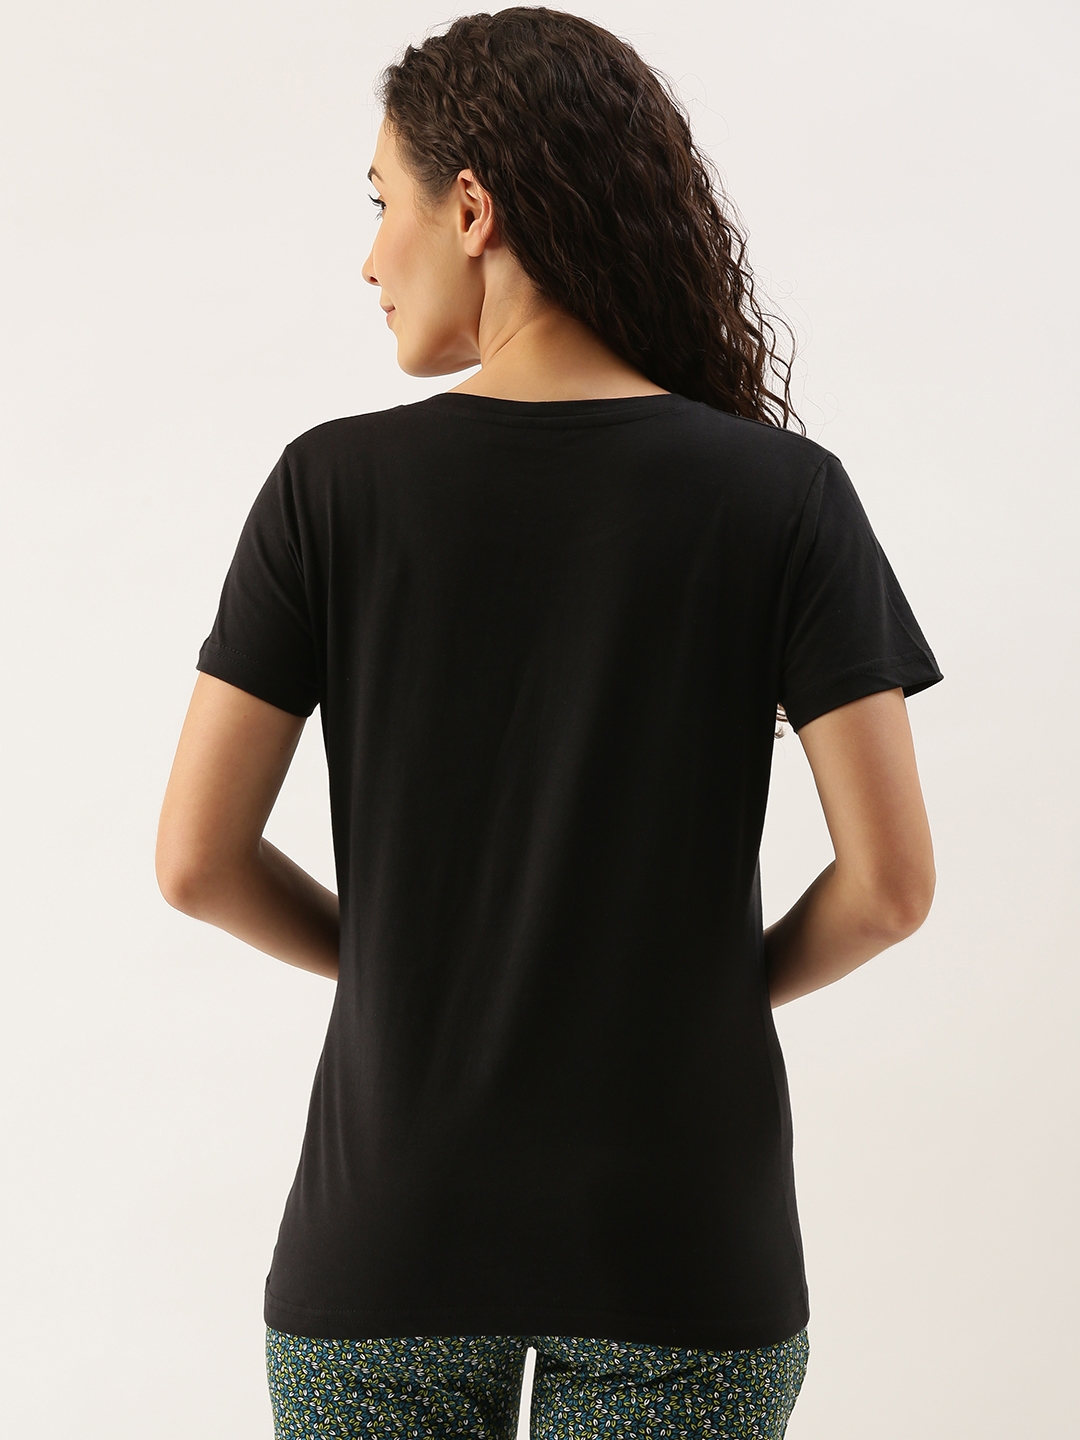 Kryptic | Women's Black Cotton Printed T-Shirts 3